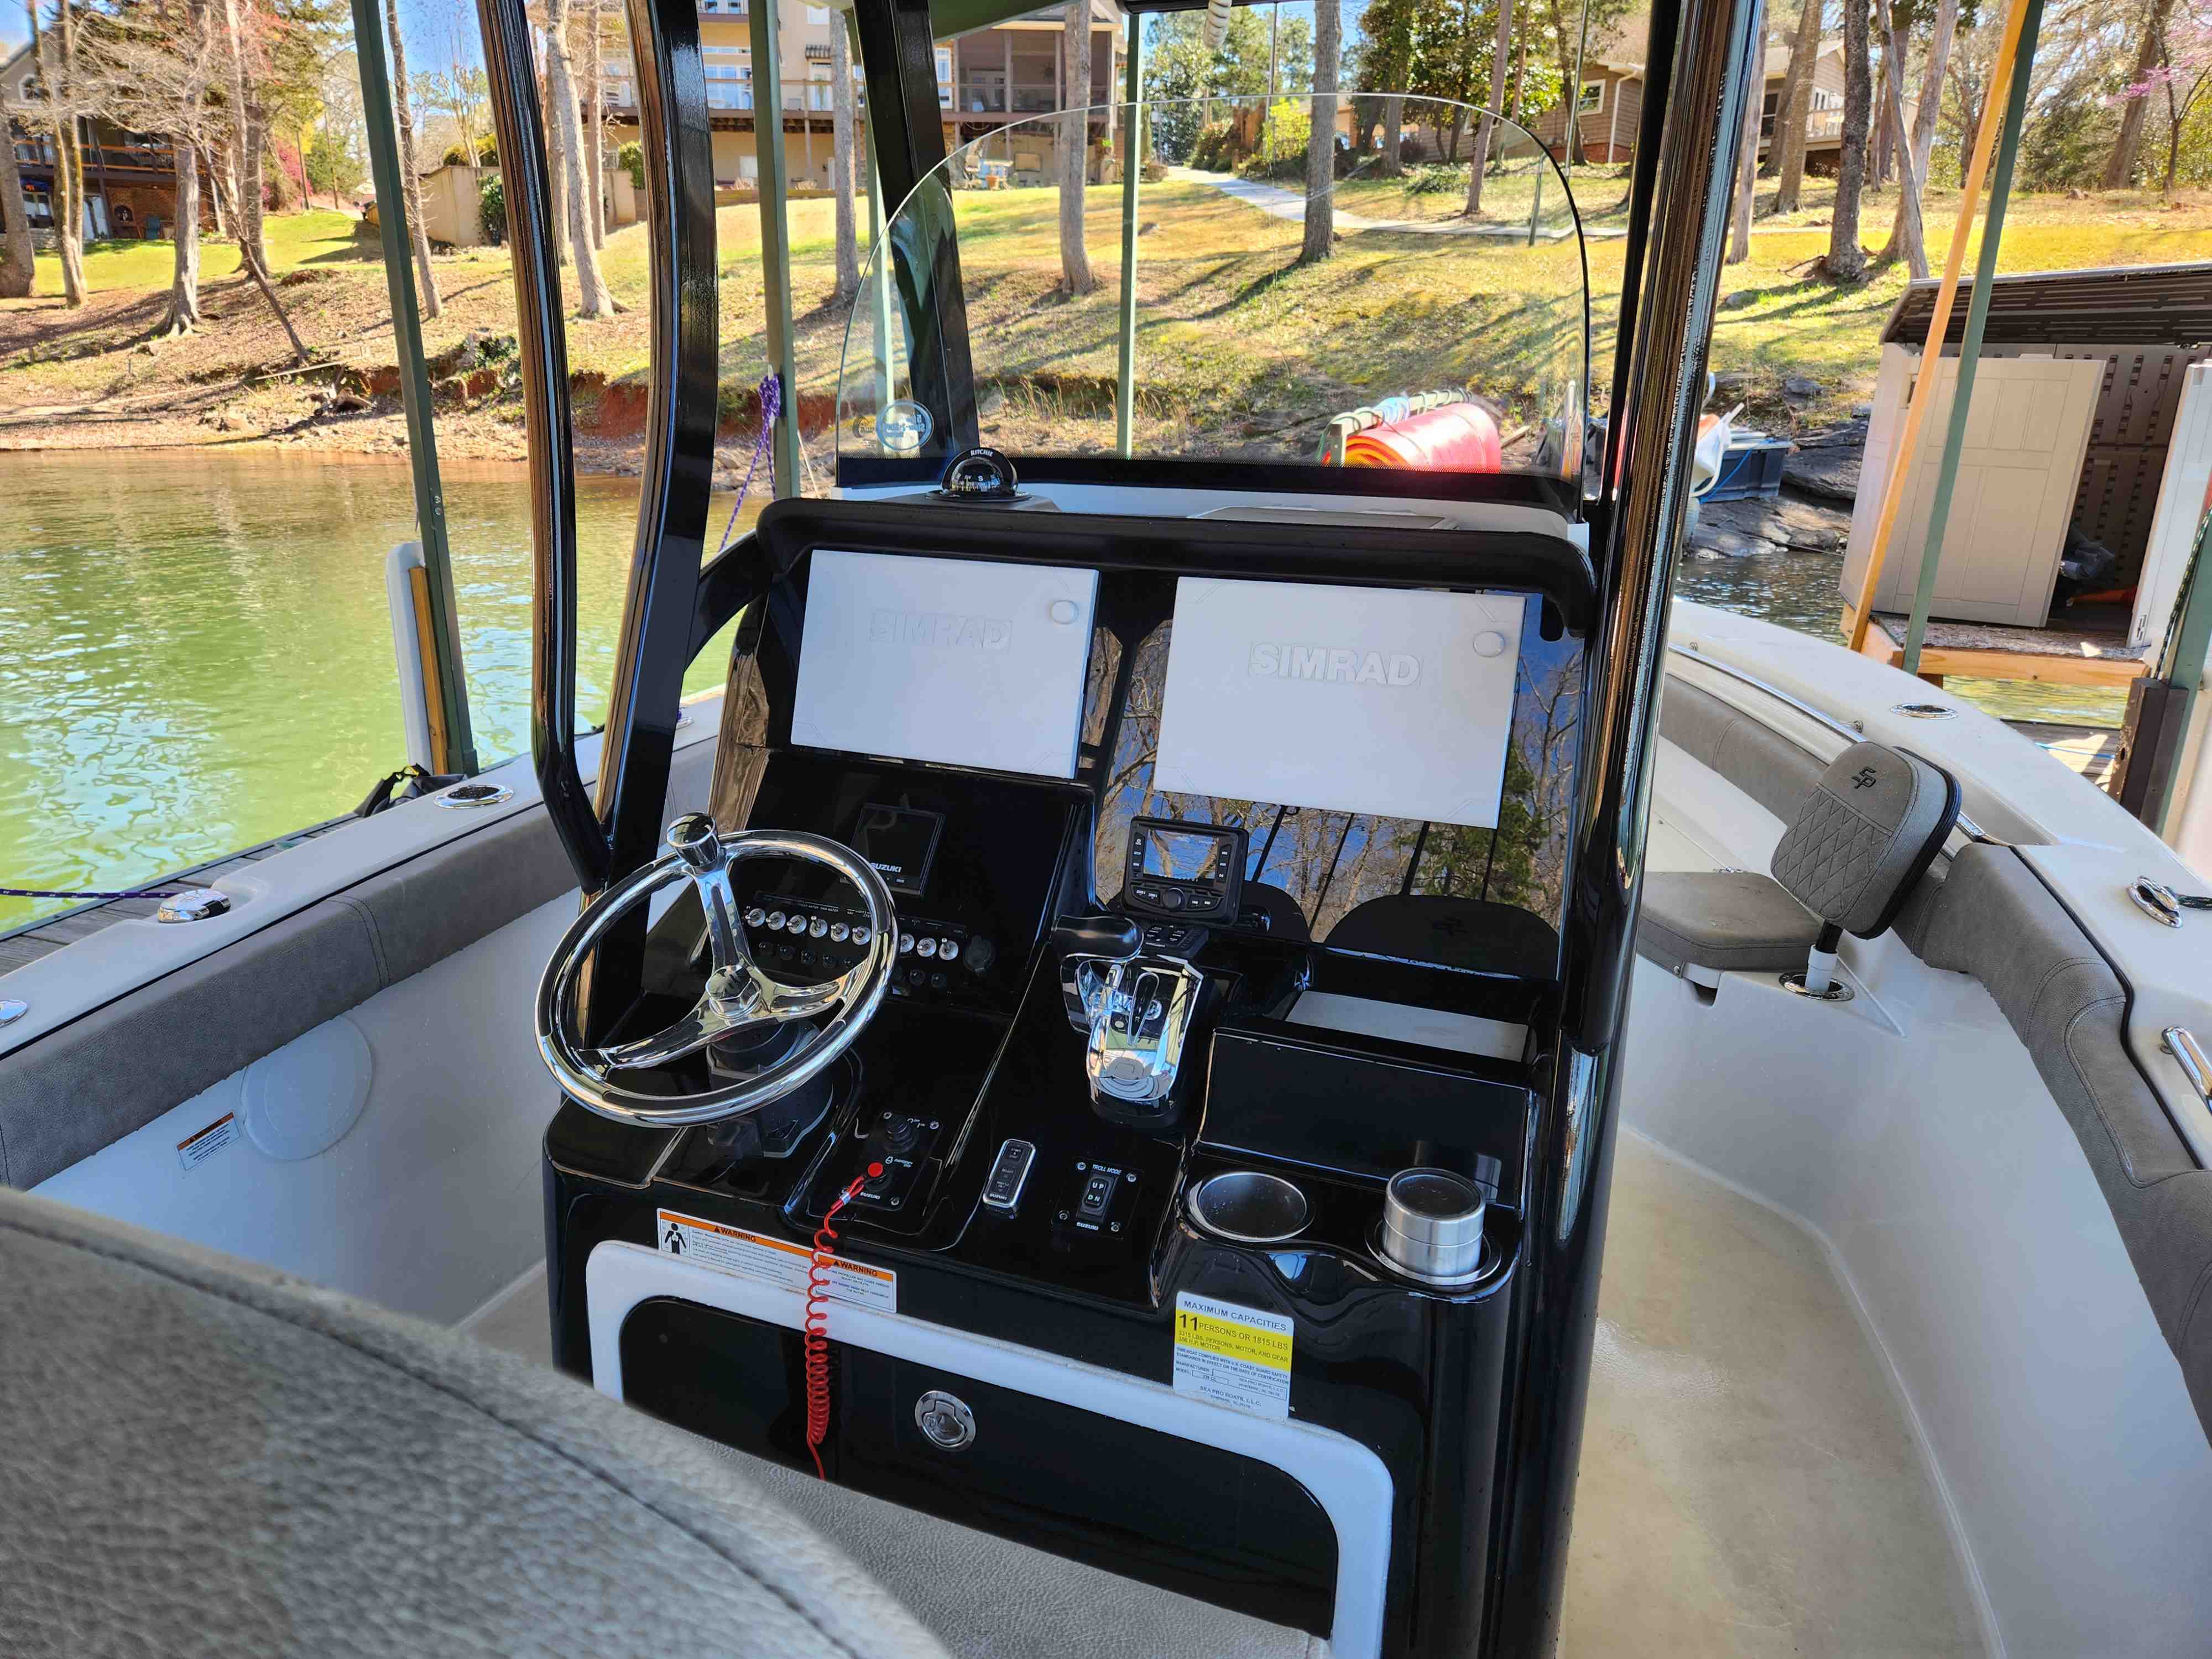  boat rentals South Carolina ANDERSON South Carolina  Sea Pro 239 DLX 2022 24 